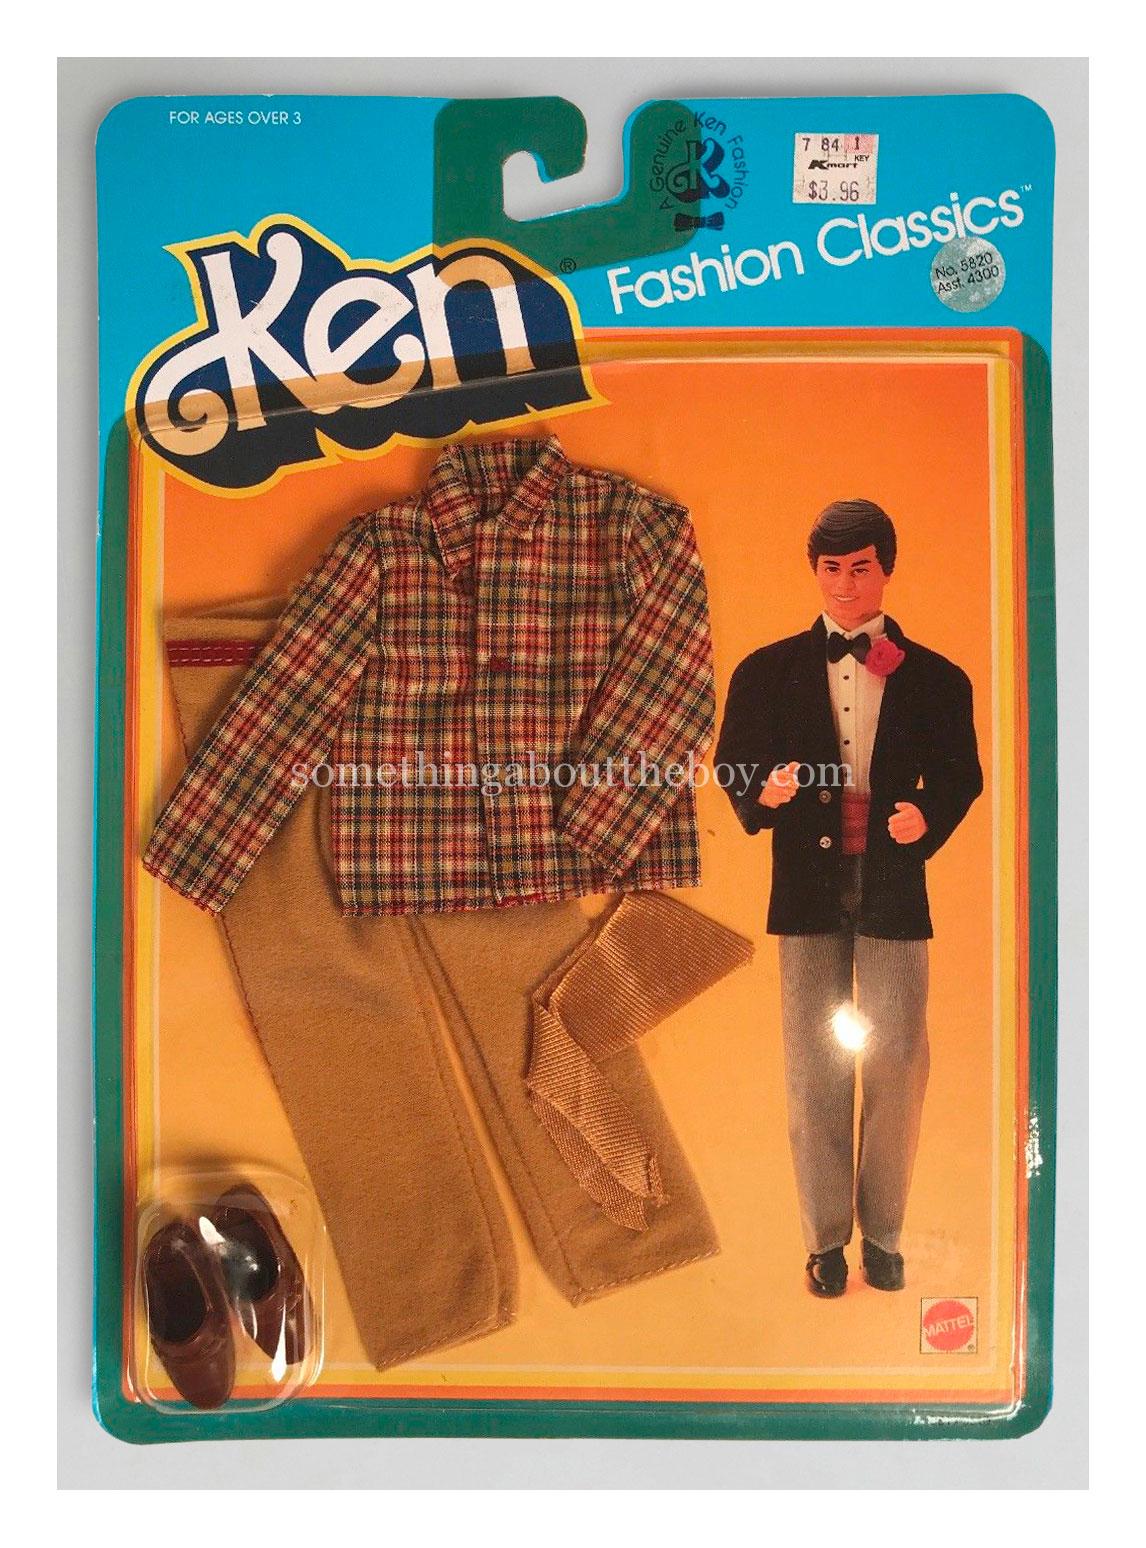 1983-84 Kmart Fashion Classics #5820 in original packaging